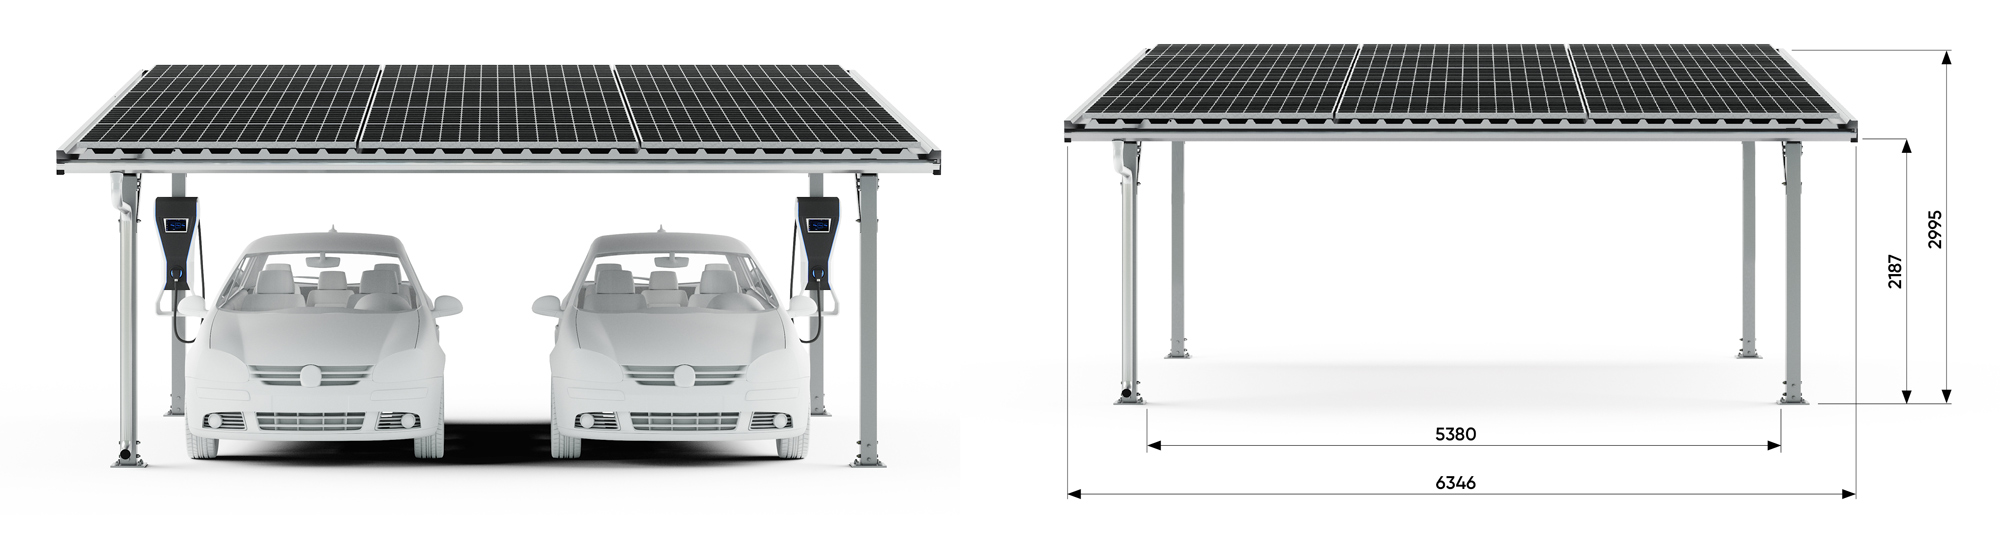 Solarcarports Ecotrading